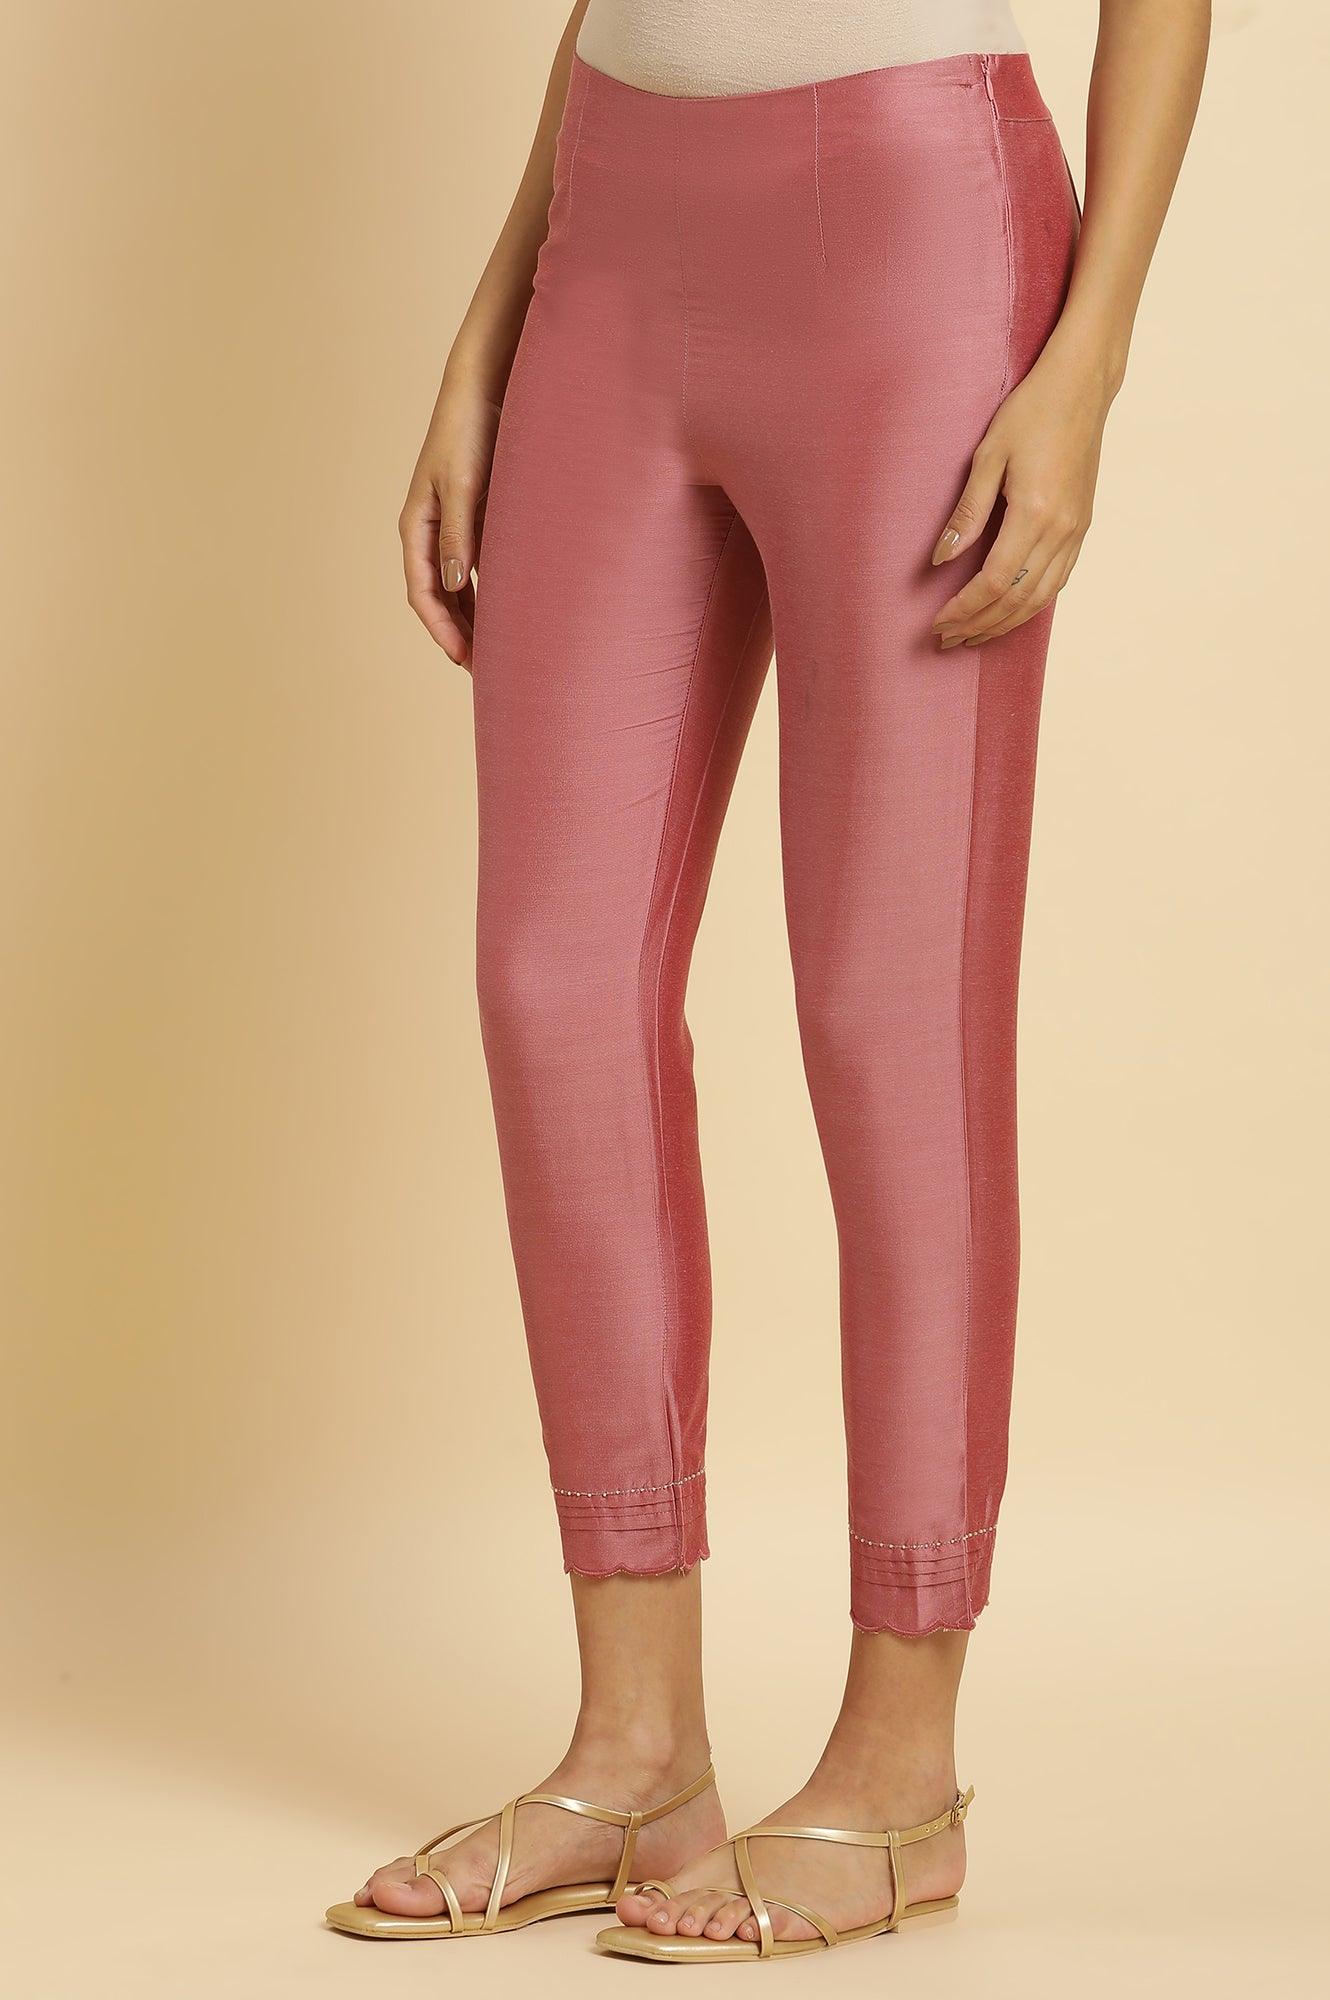 Pink Festive Solid Slim Pants - wforwoman